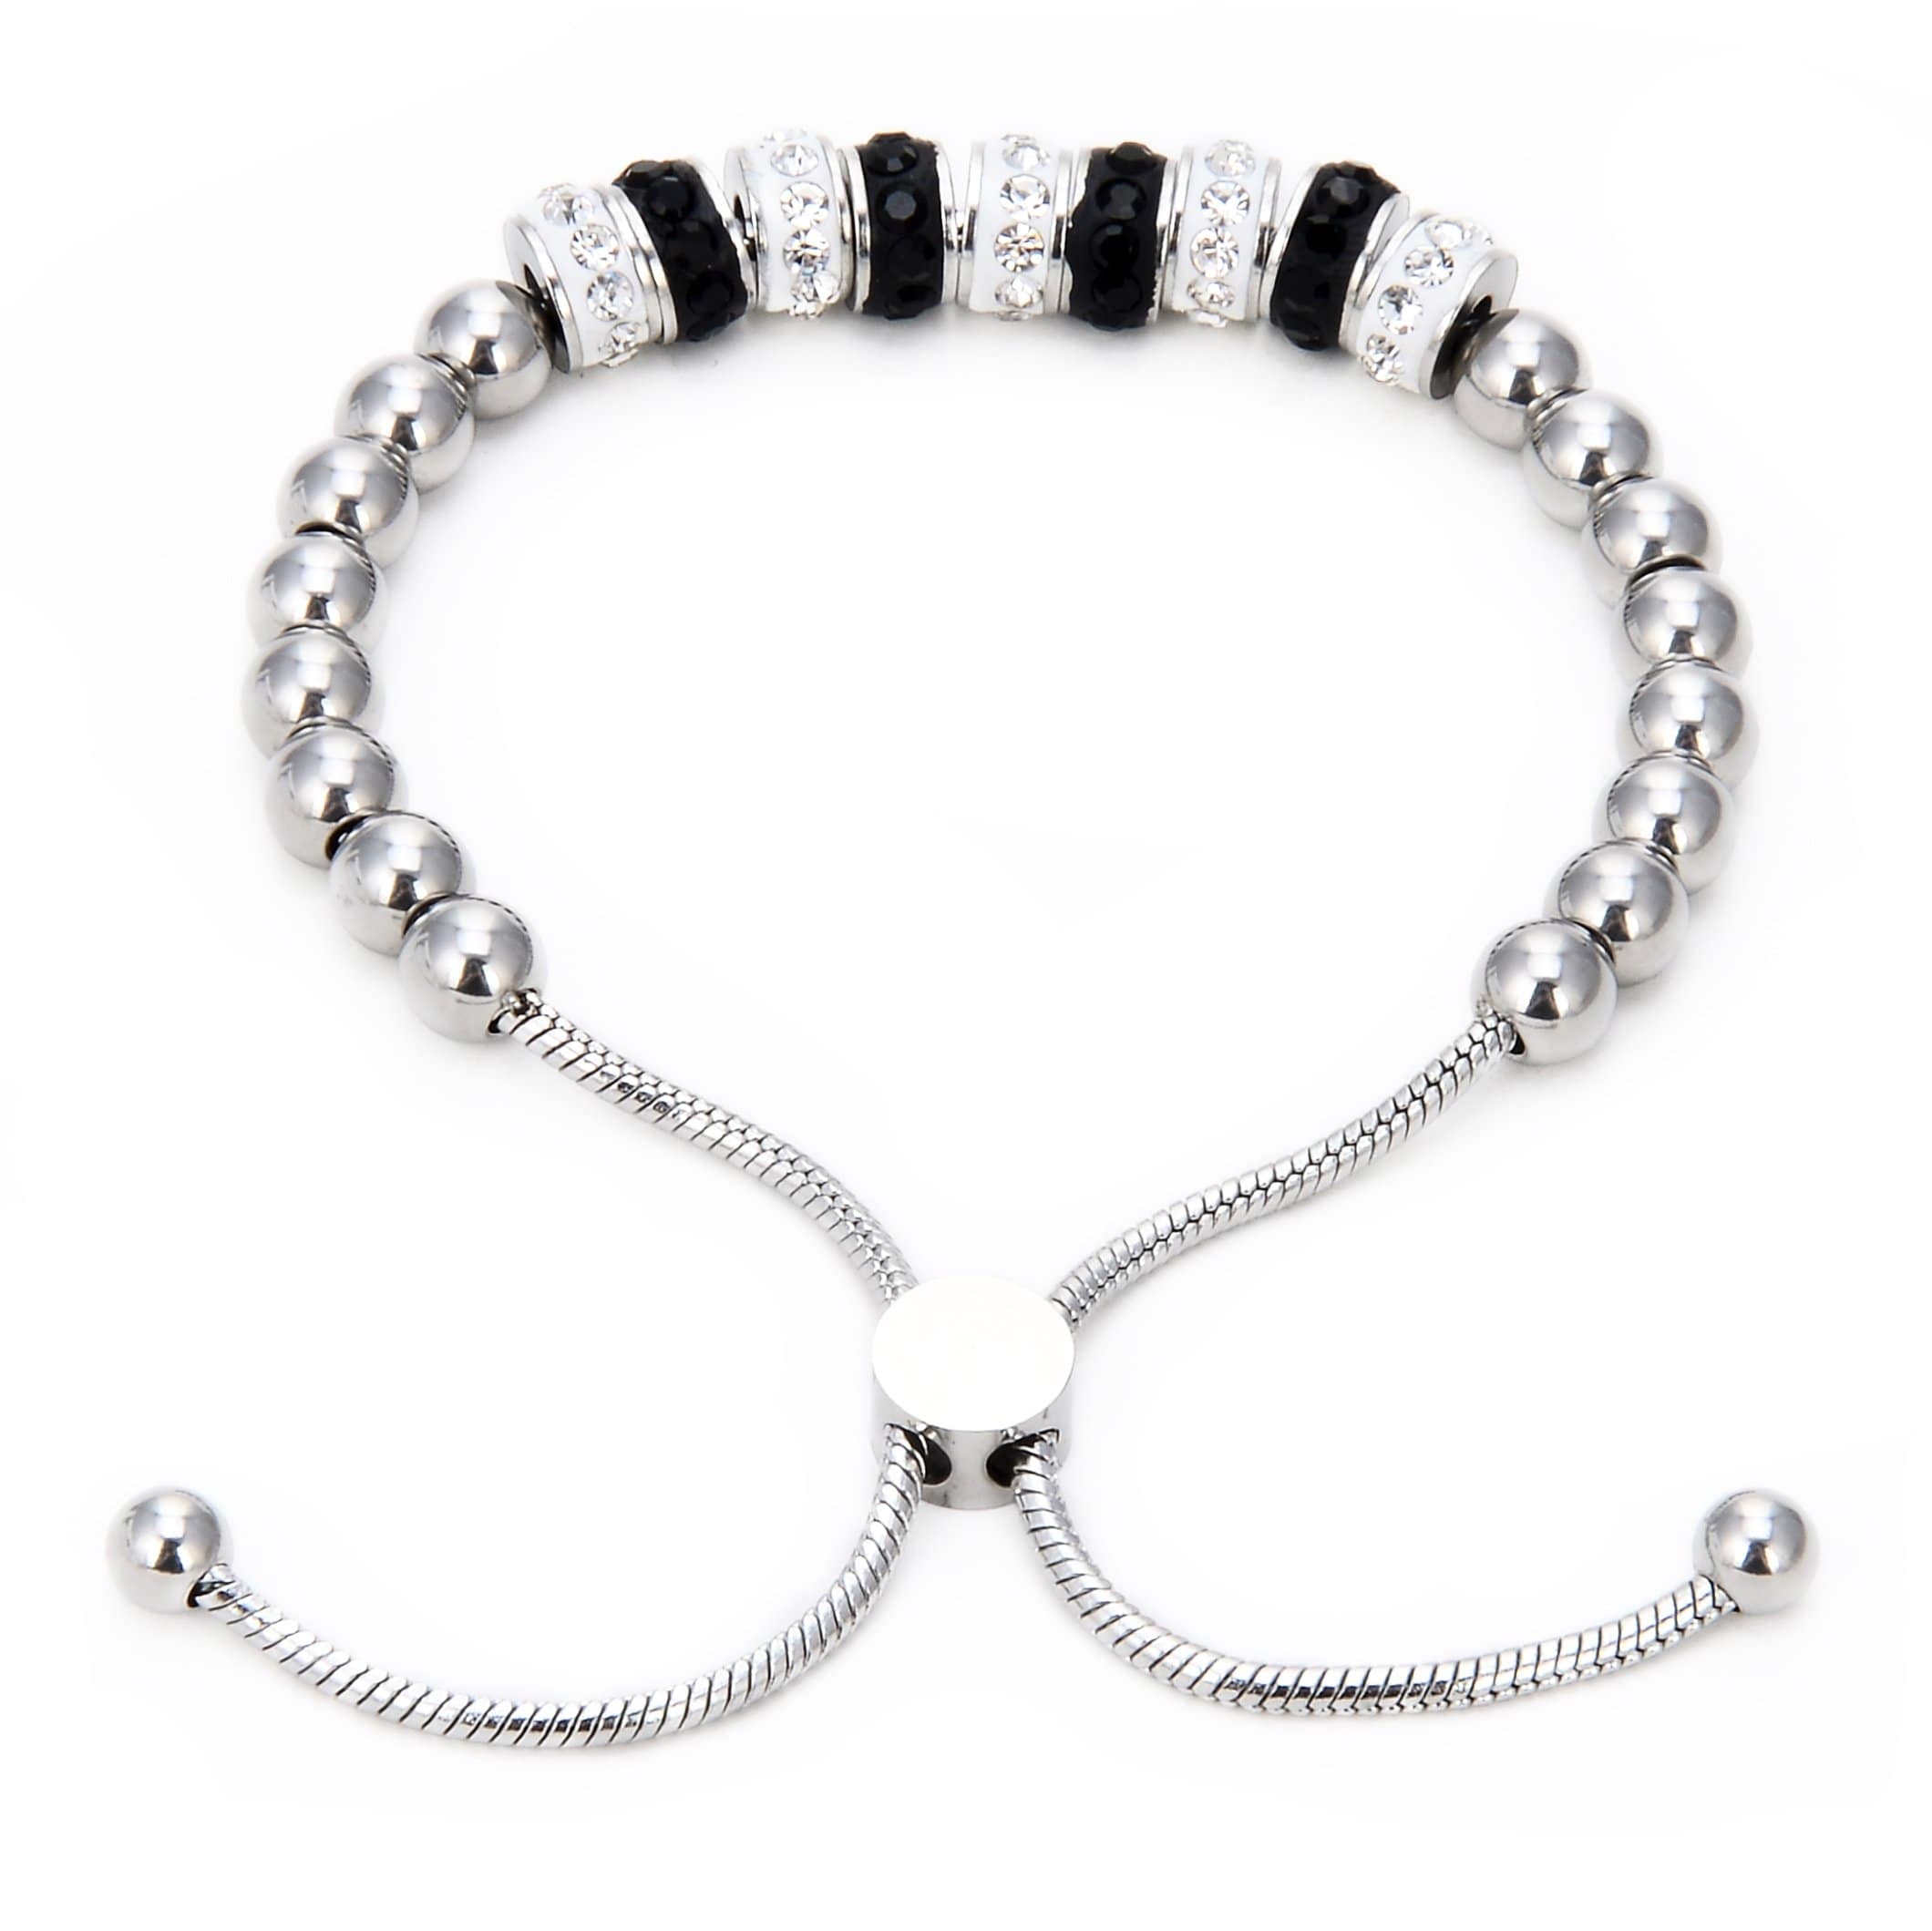 Kalifano Steel Hearts Jewelry Steel Hearts Black and White Gemstone Bead Bracelet SHB200-135